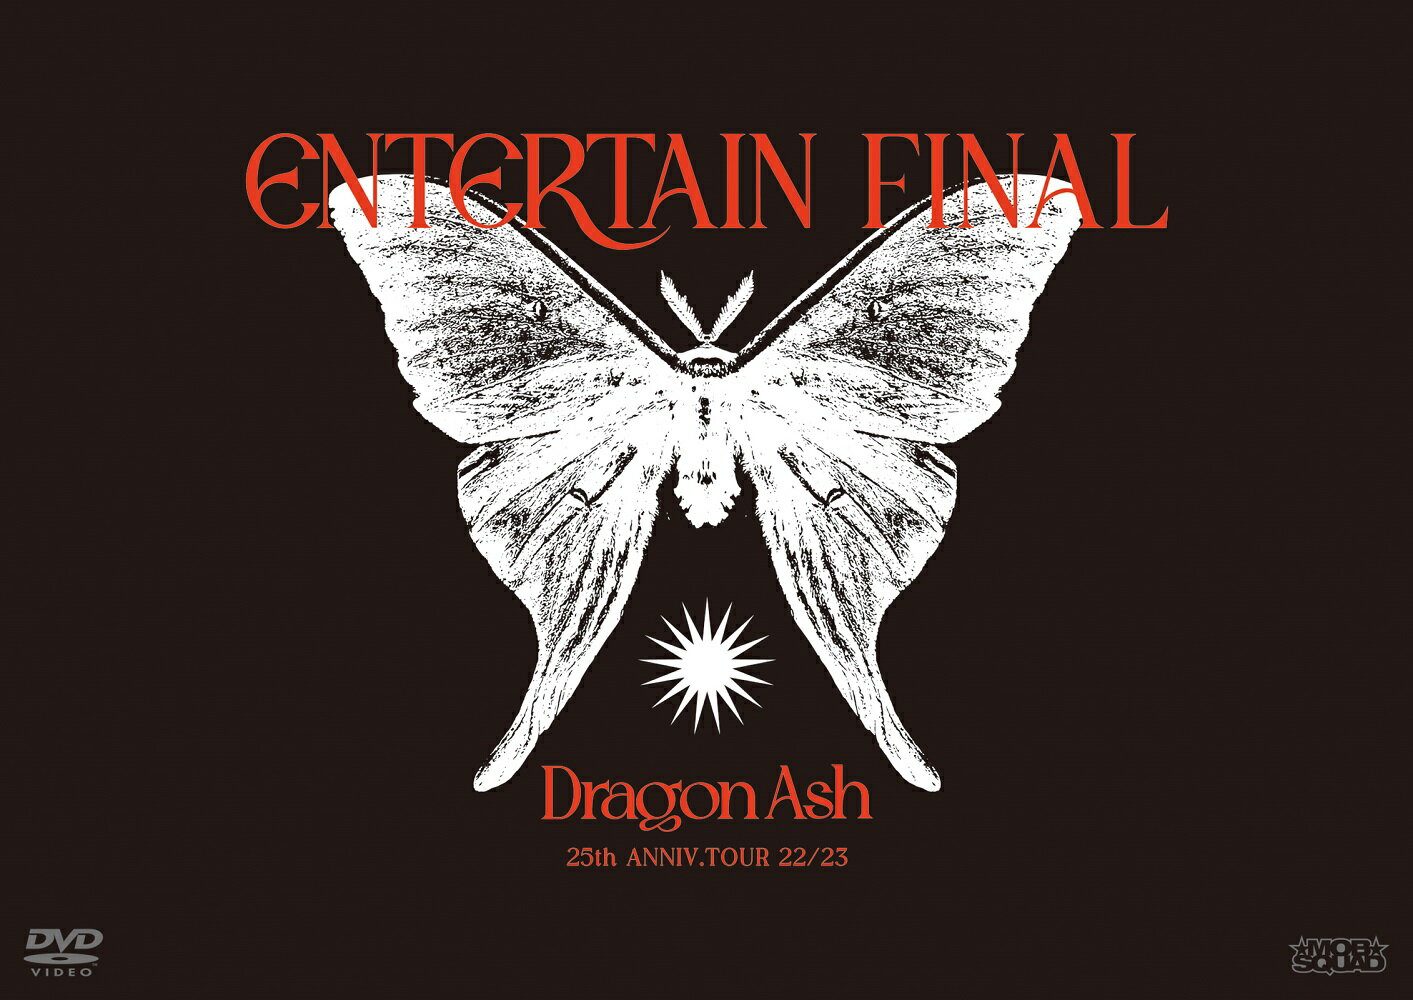 25th ANNIV. TOUR 22/23 〜 ENTERTAIN 〜 FINAL(DVD通常盤)